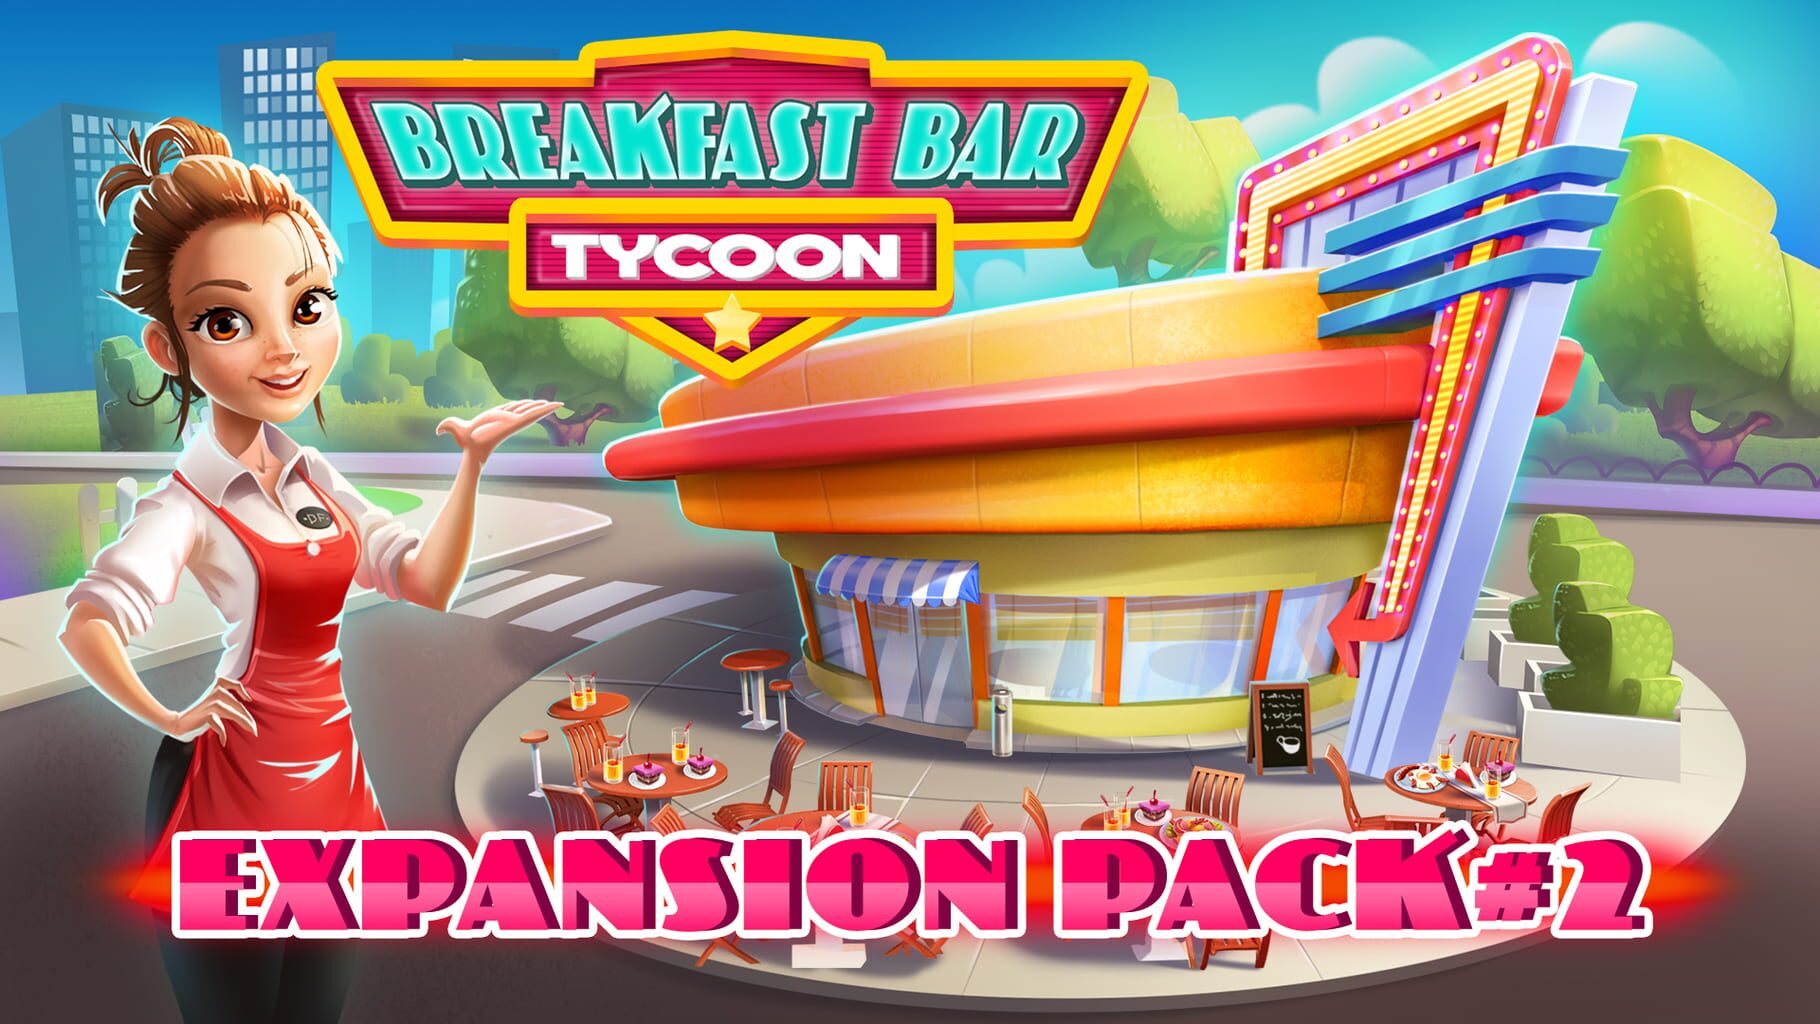 Breakfast Bar Tycoon: Expansion Pack 2 artwork